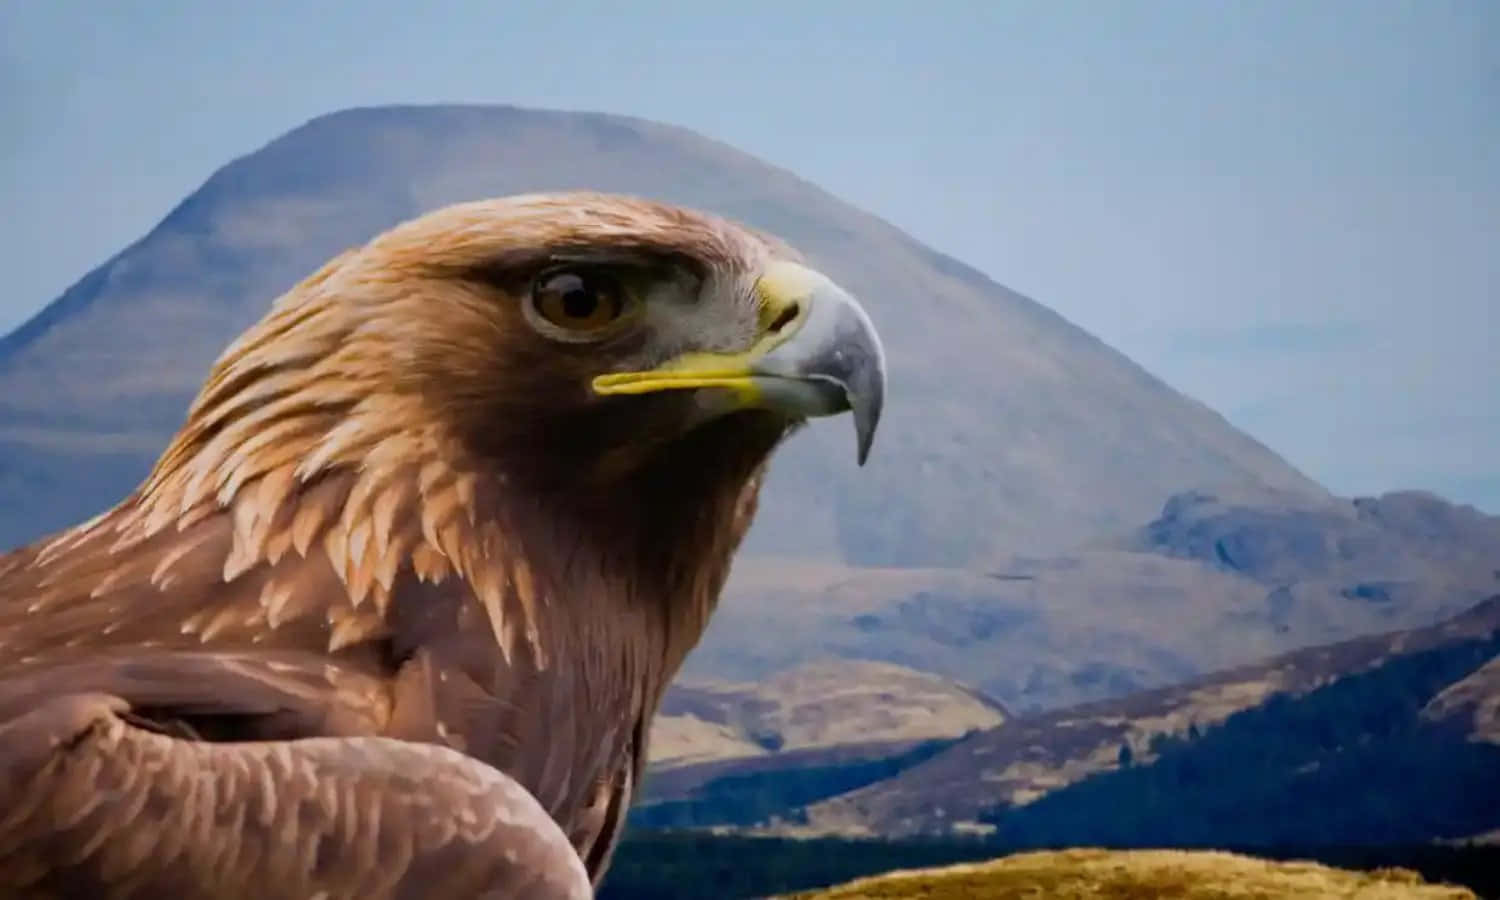 Voandoalto - Uma Majestosa Águia Dourada